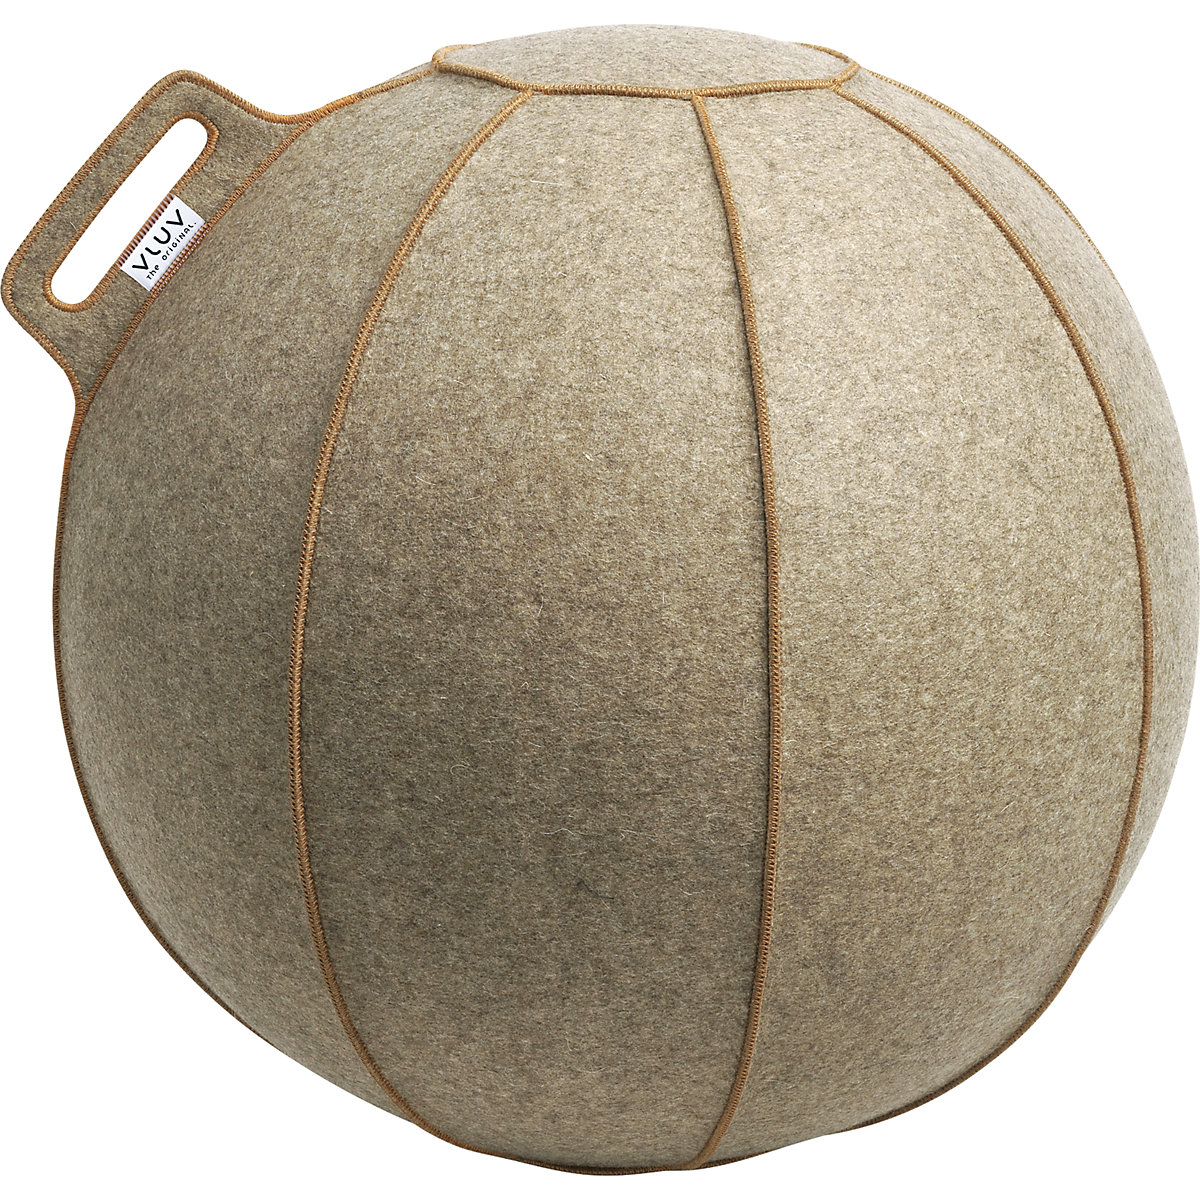 Fitball VELT – VLUV, in feltro di lana merino, 600 – 650 mm, greige-screziato/marrone-9